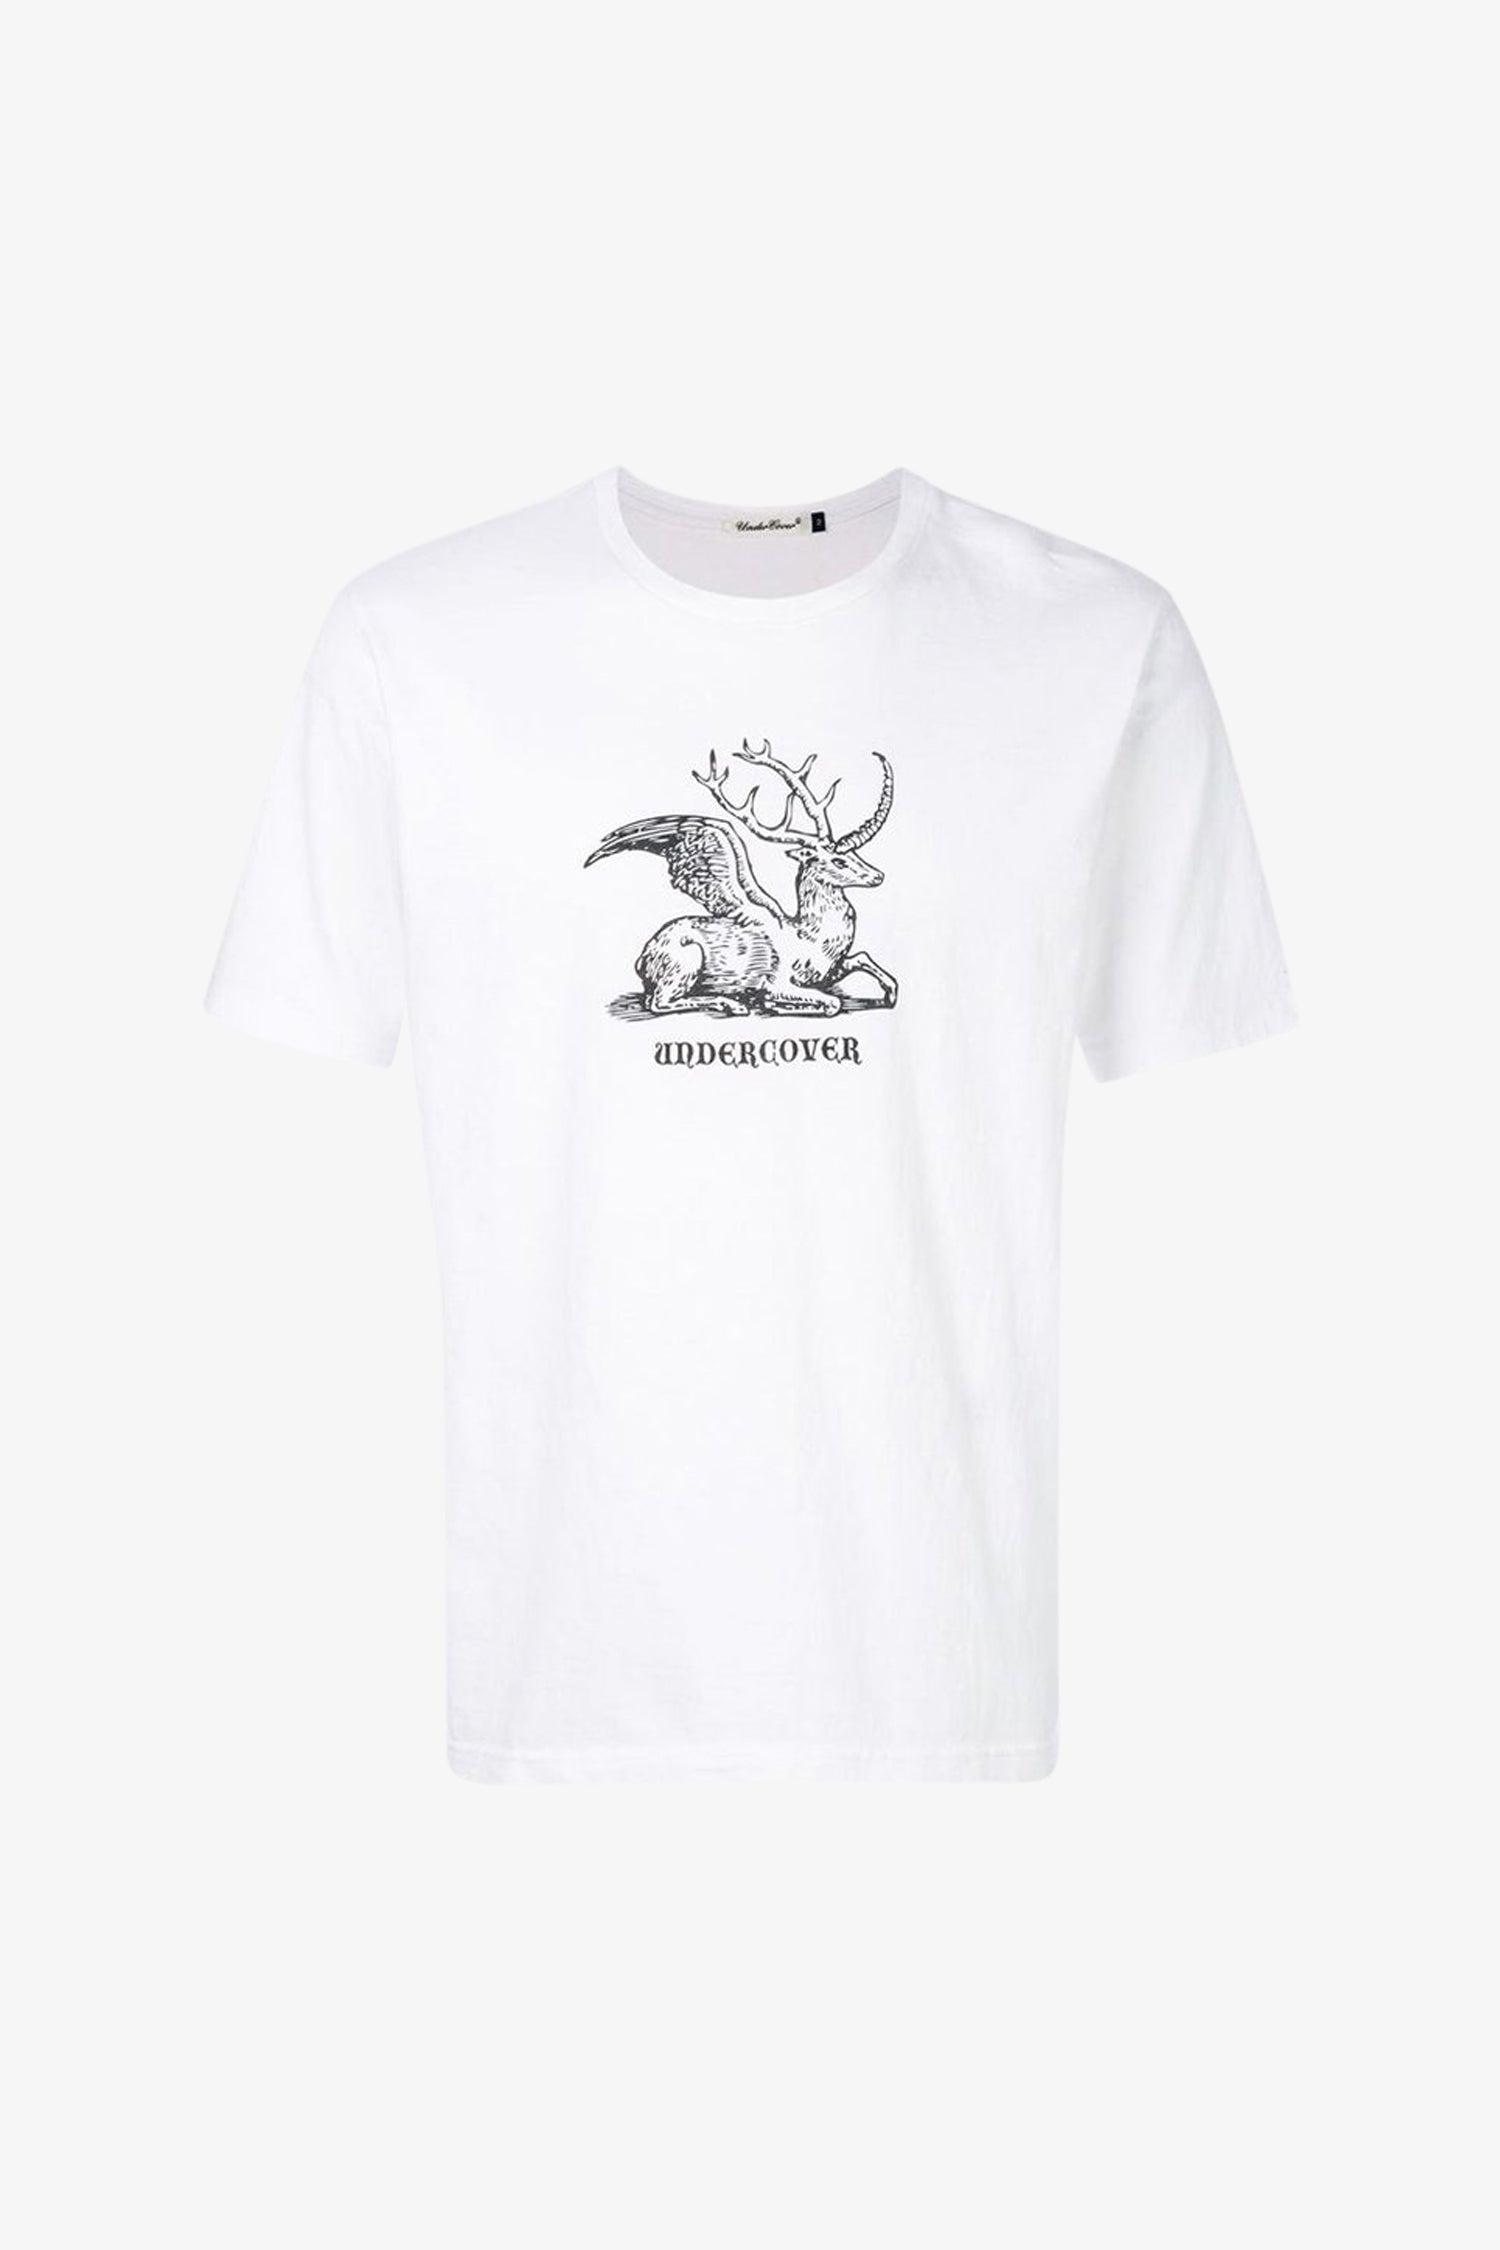 Selectshop FRAME - UNDERCOVER Unicorn T-Shirt T-Shirt Dubai